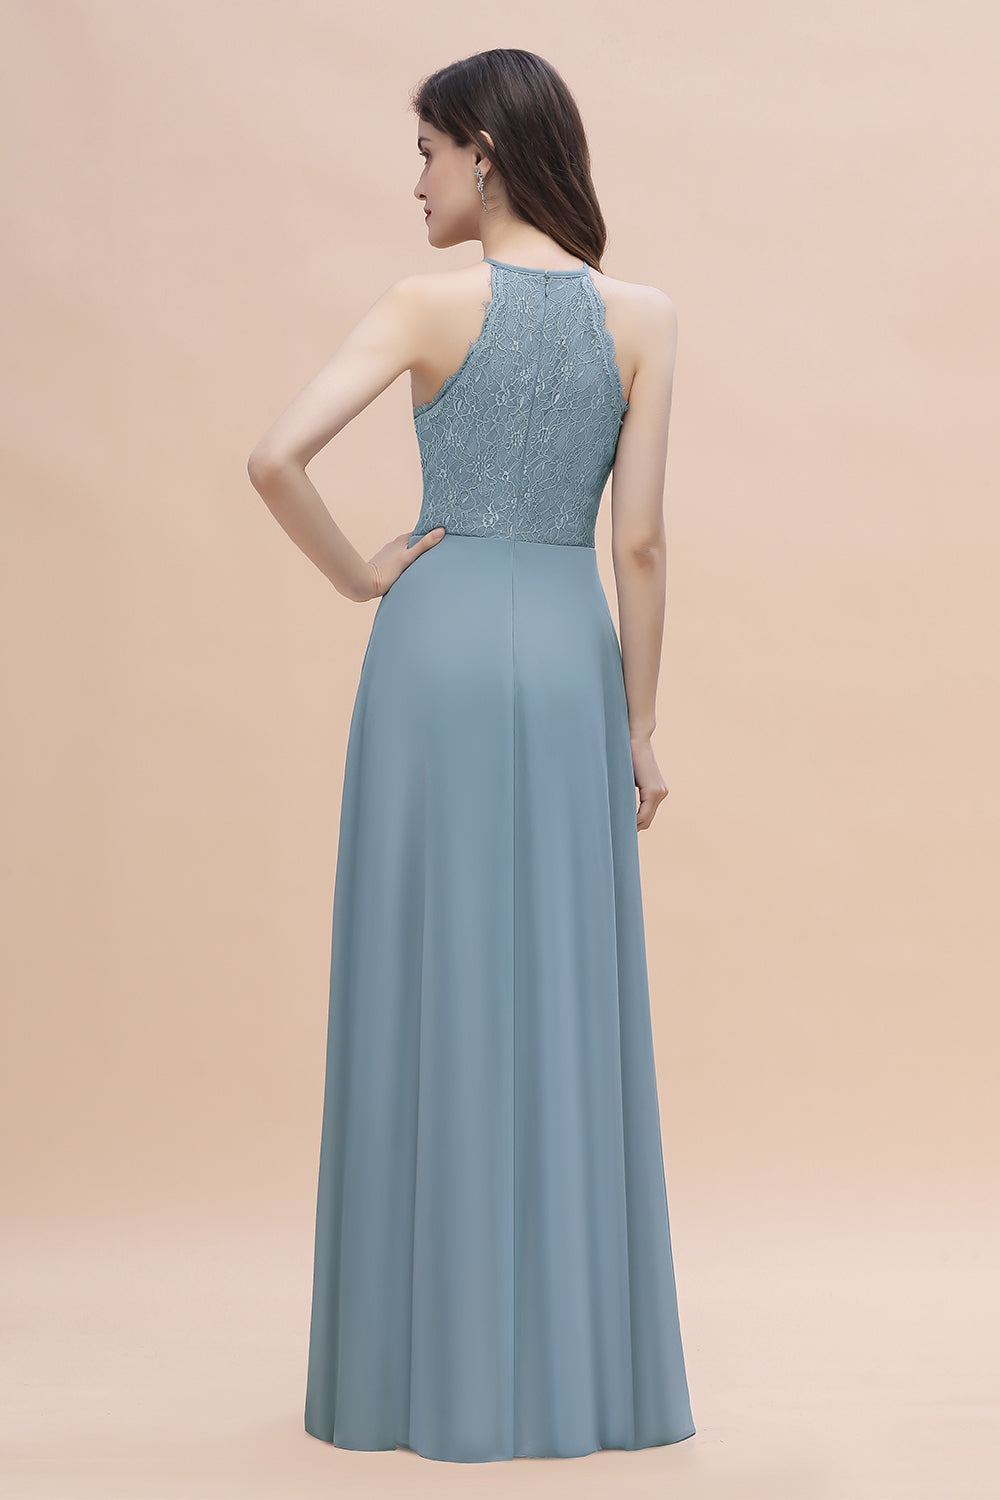 Elegant Jewel Lace Appliques Dusty Blue Chiffon Bridesmaid Dress On Sale-27dress